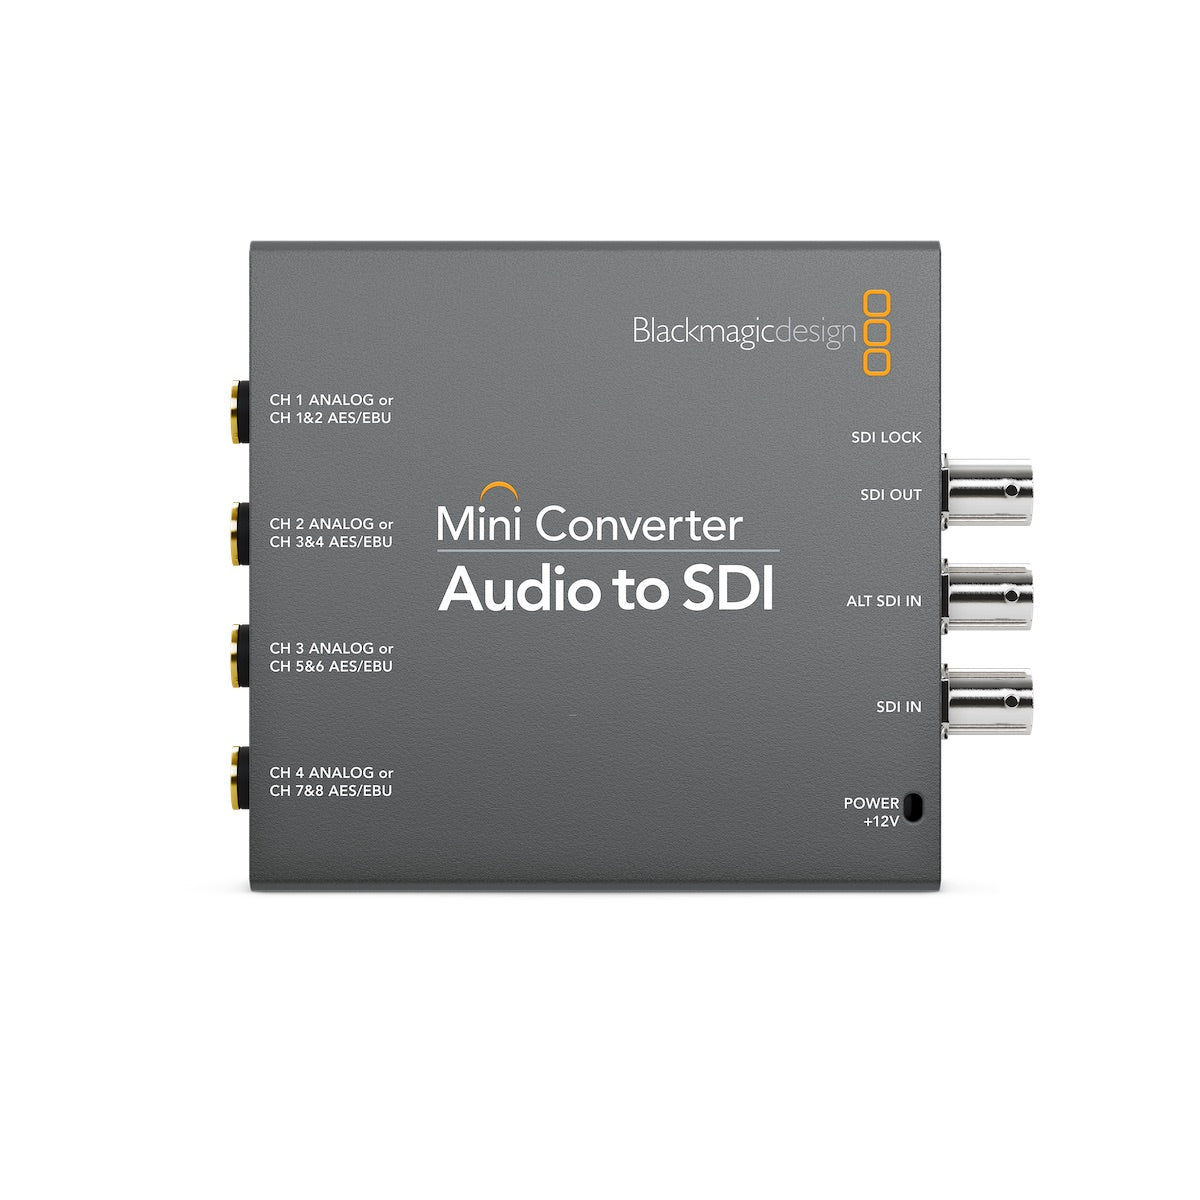 Blackmagic Mini Converter Audio to SDI, front